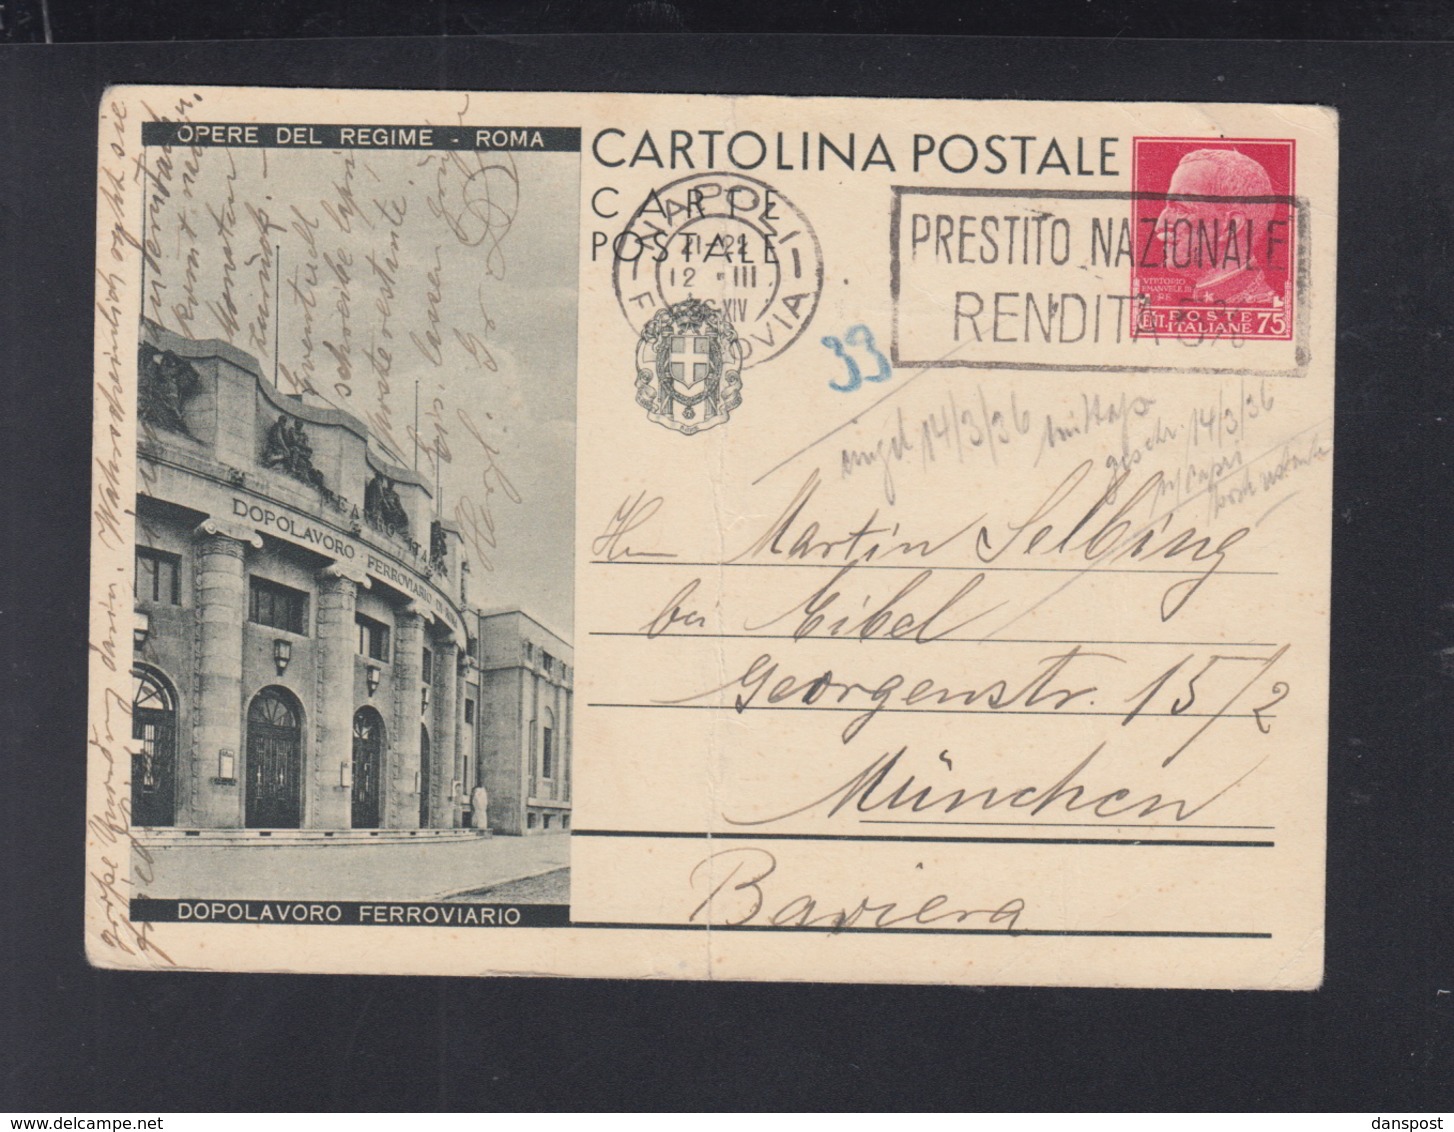 Cartolina Dopolavoro Ferroviario 1936 - Stamped Stationery